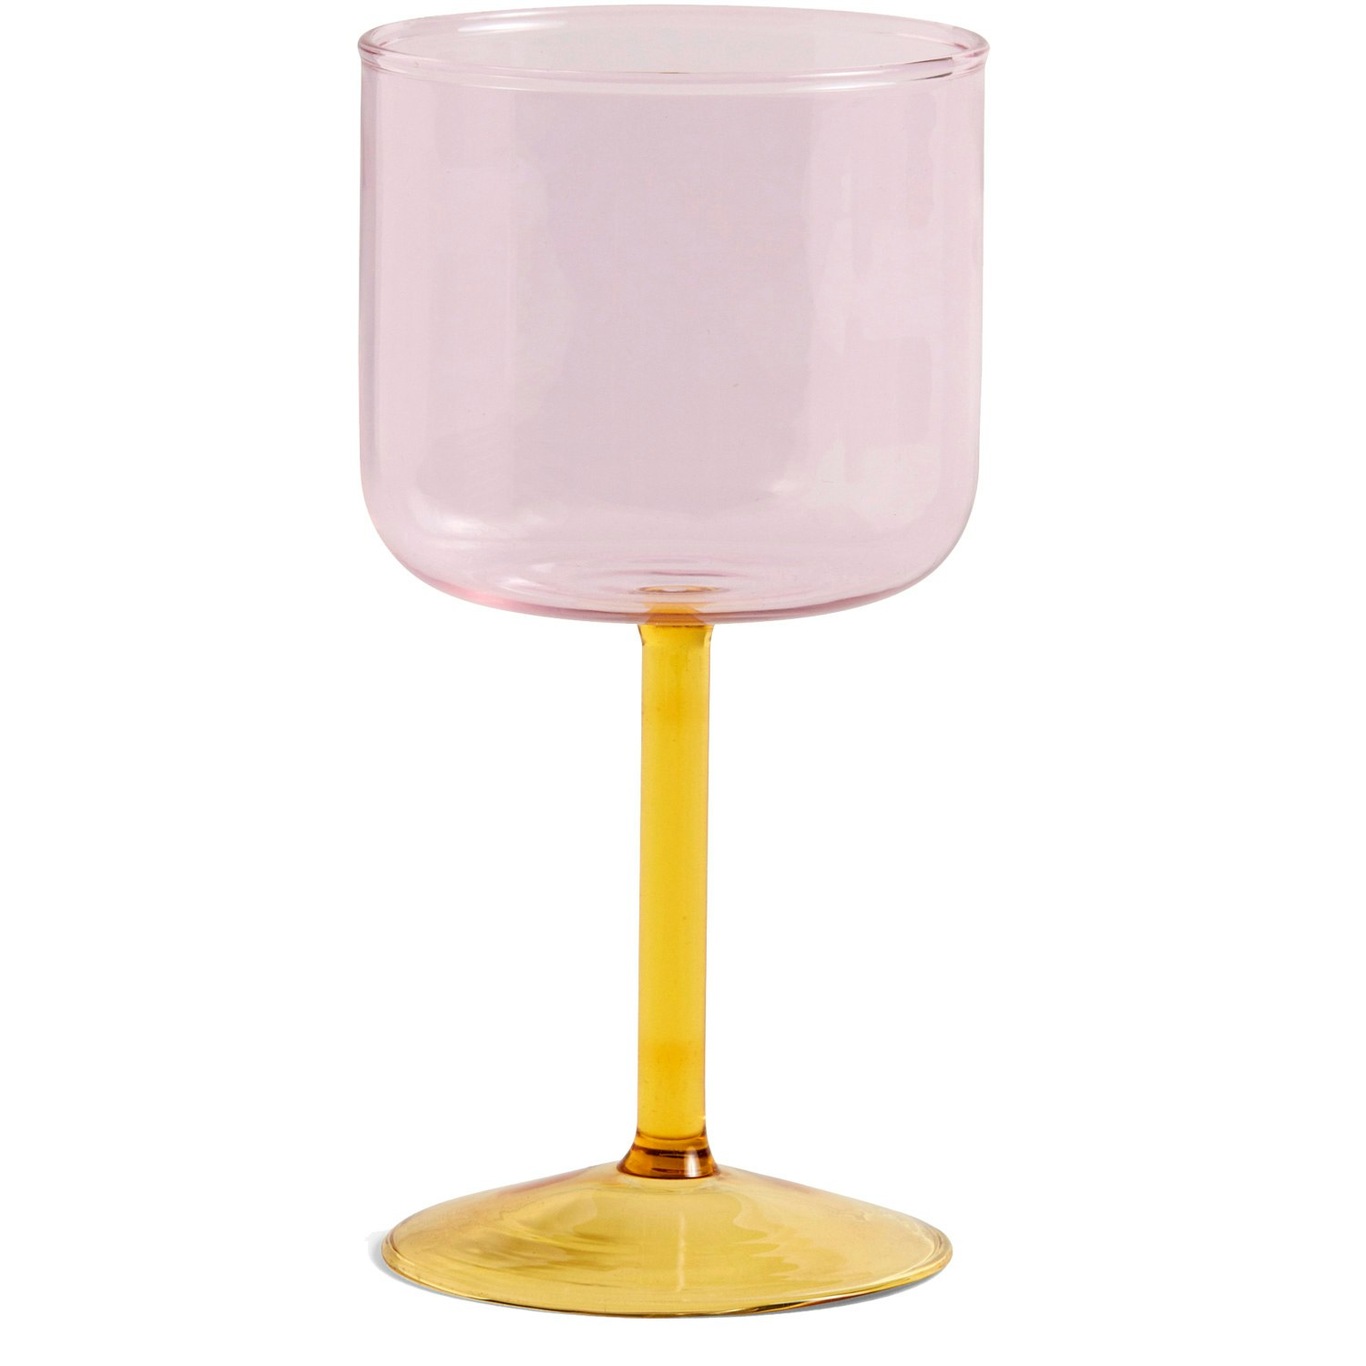 Tint Weinglas 2-er Set, Rosa / Gelb